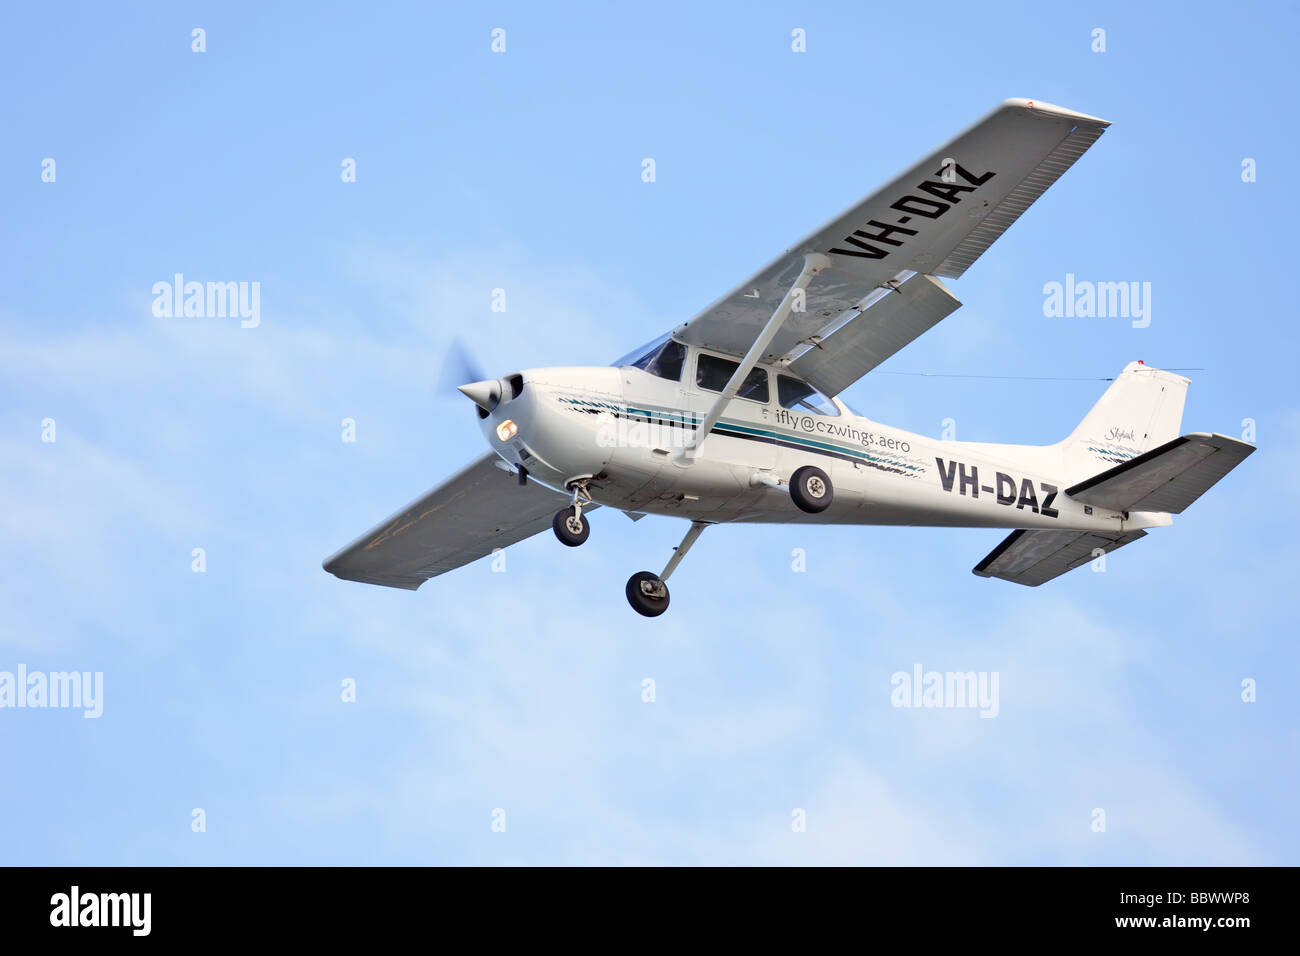 Cessna Light single engine aircraft coming into land after training flight Stock Photo